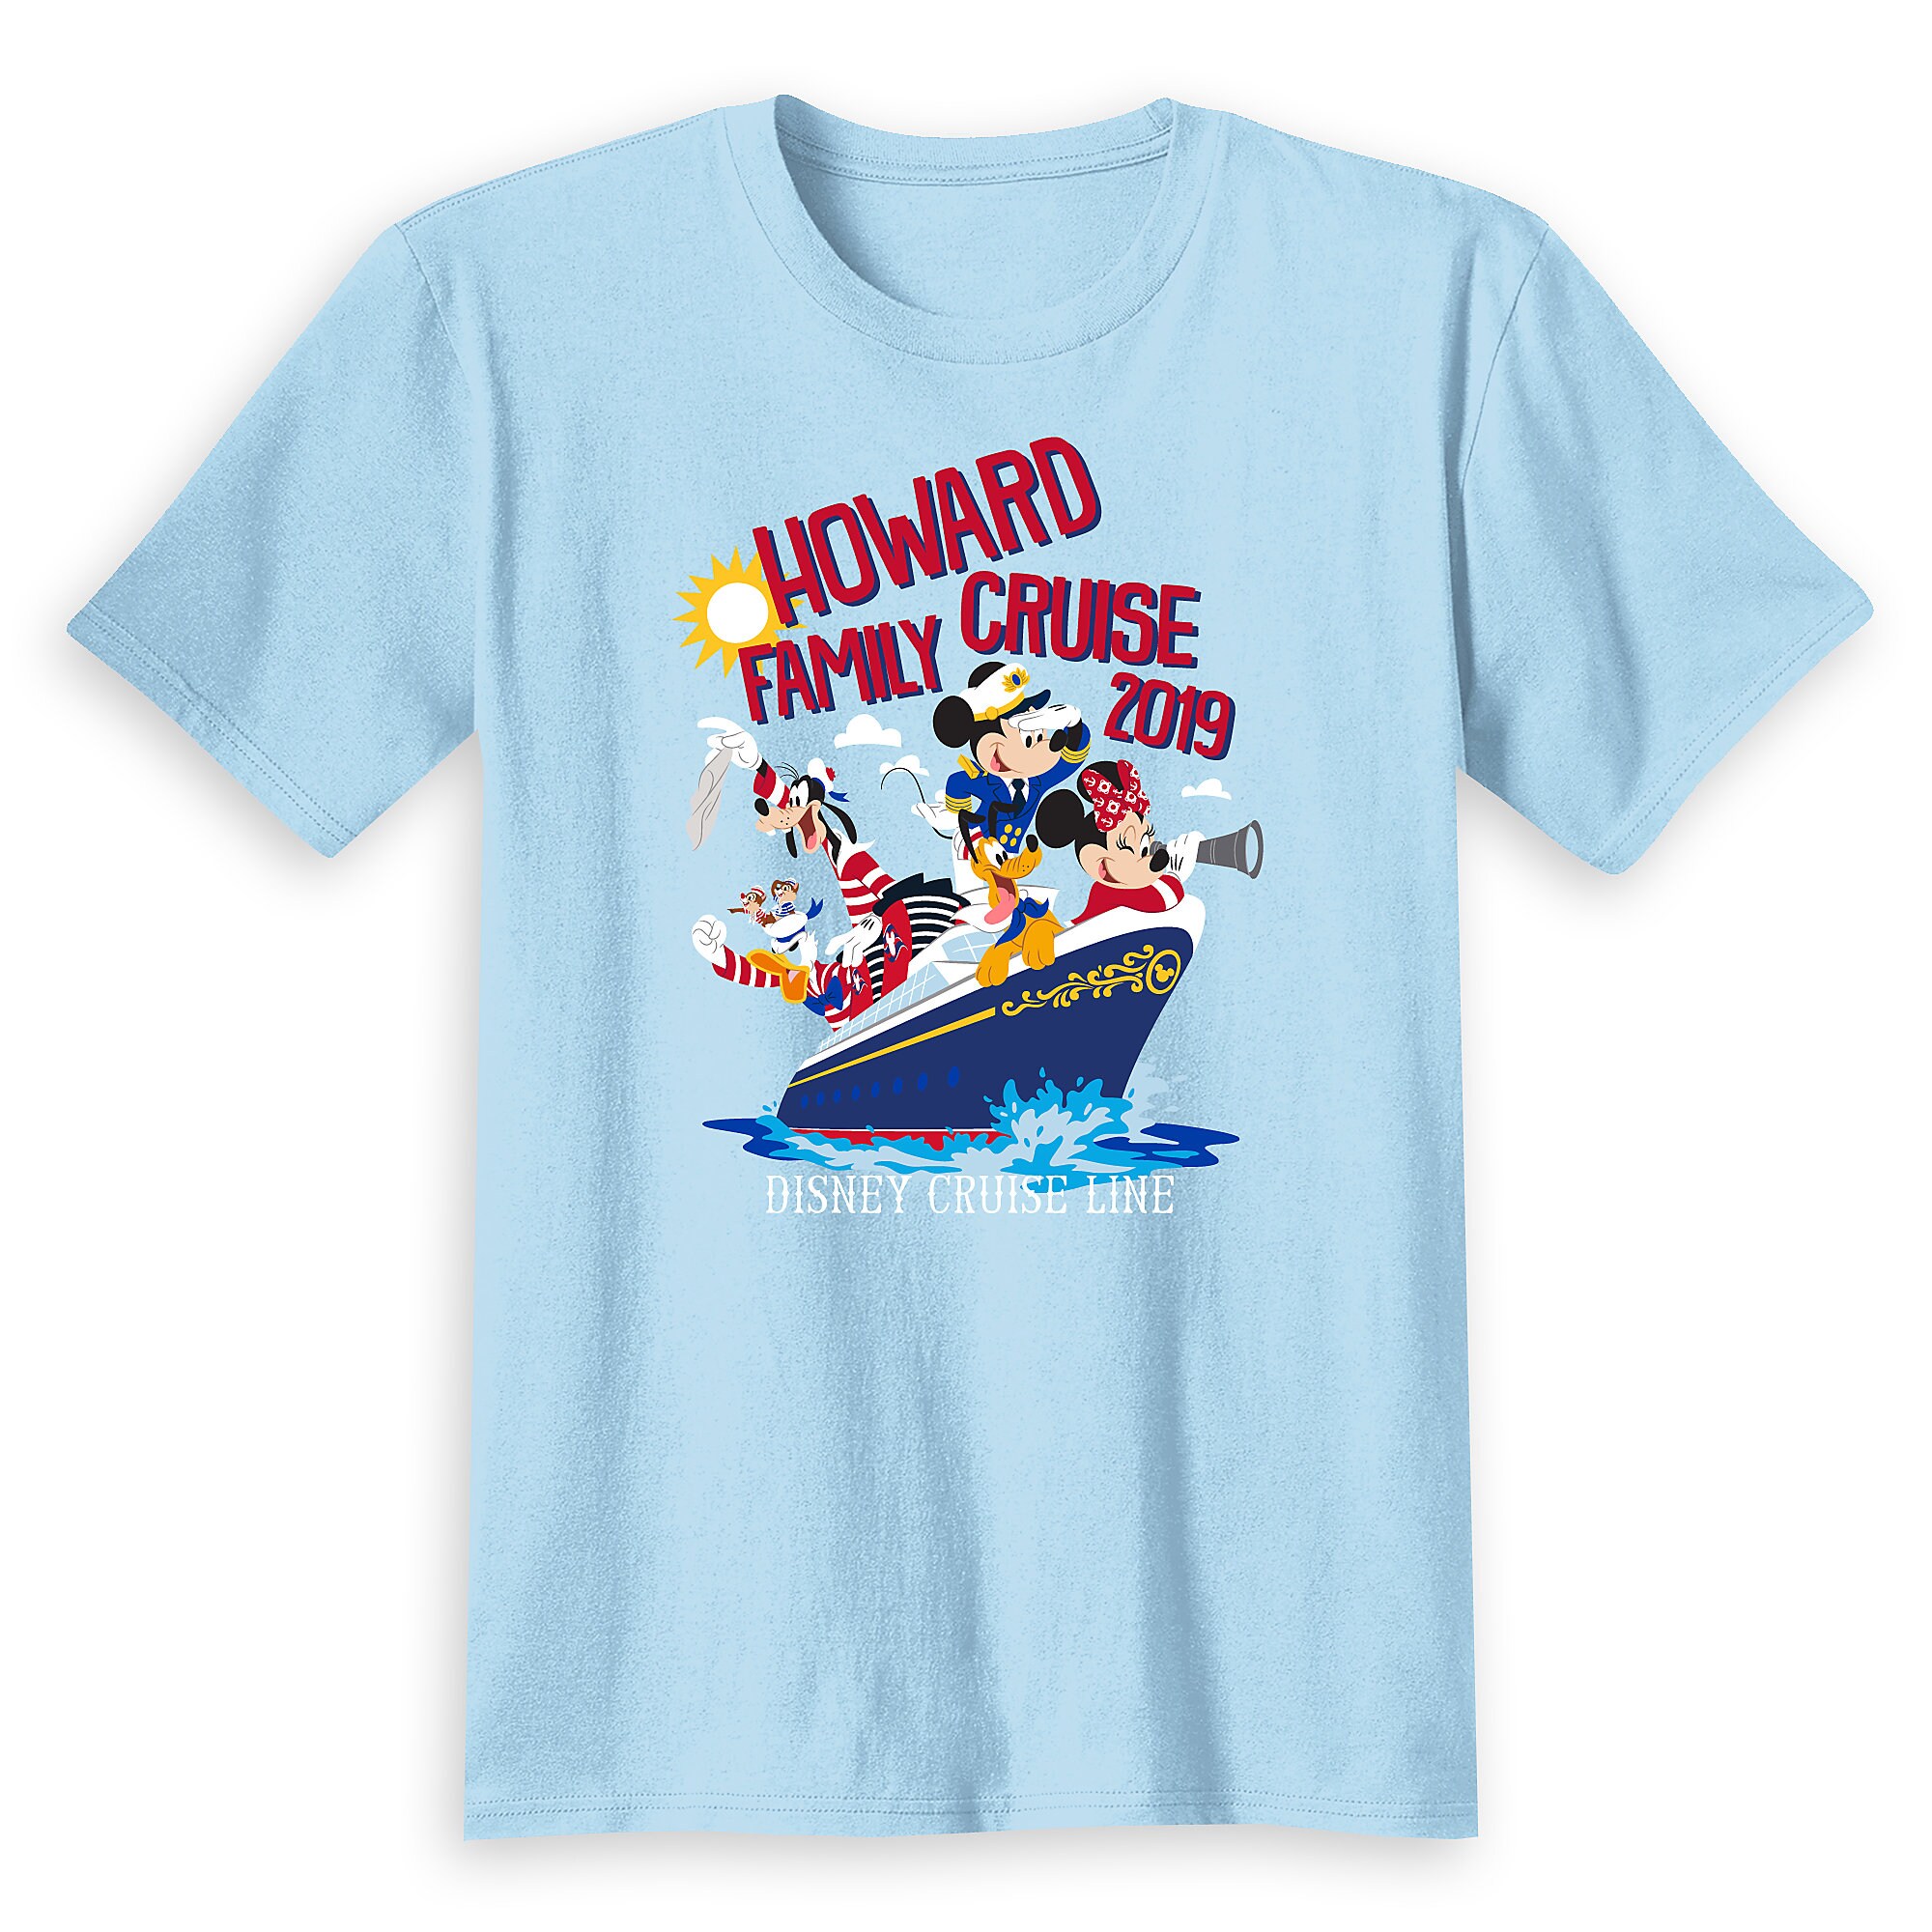 Kids' Disney Cruise Line Family Cruise 2019 T-Shirt - Customized